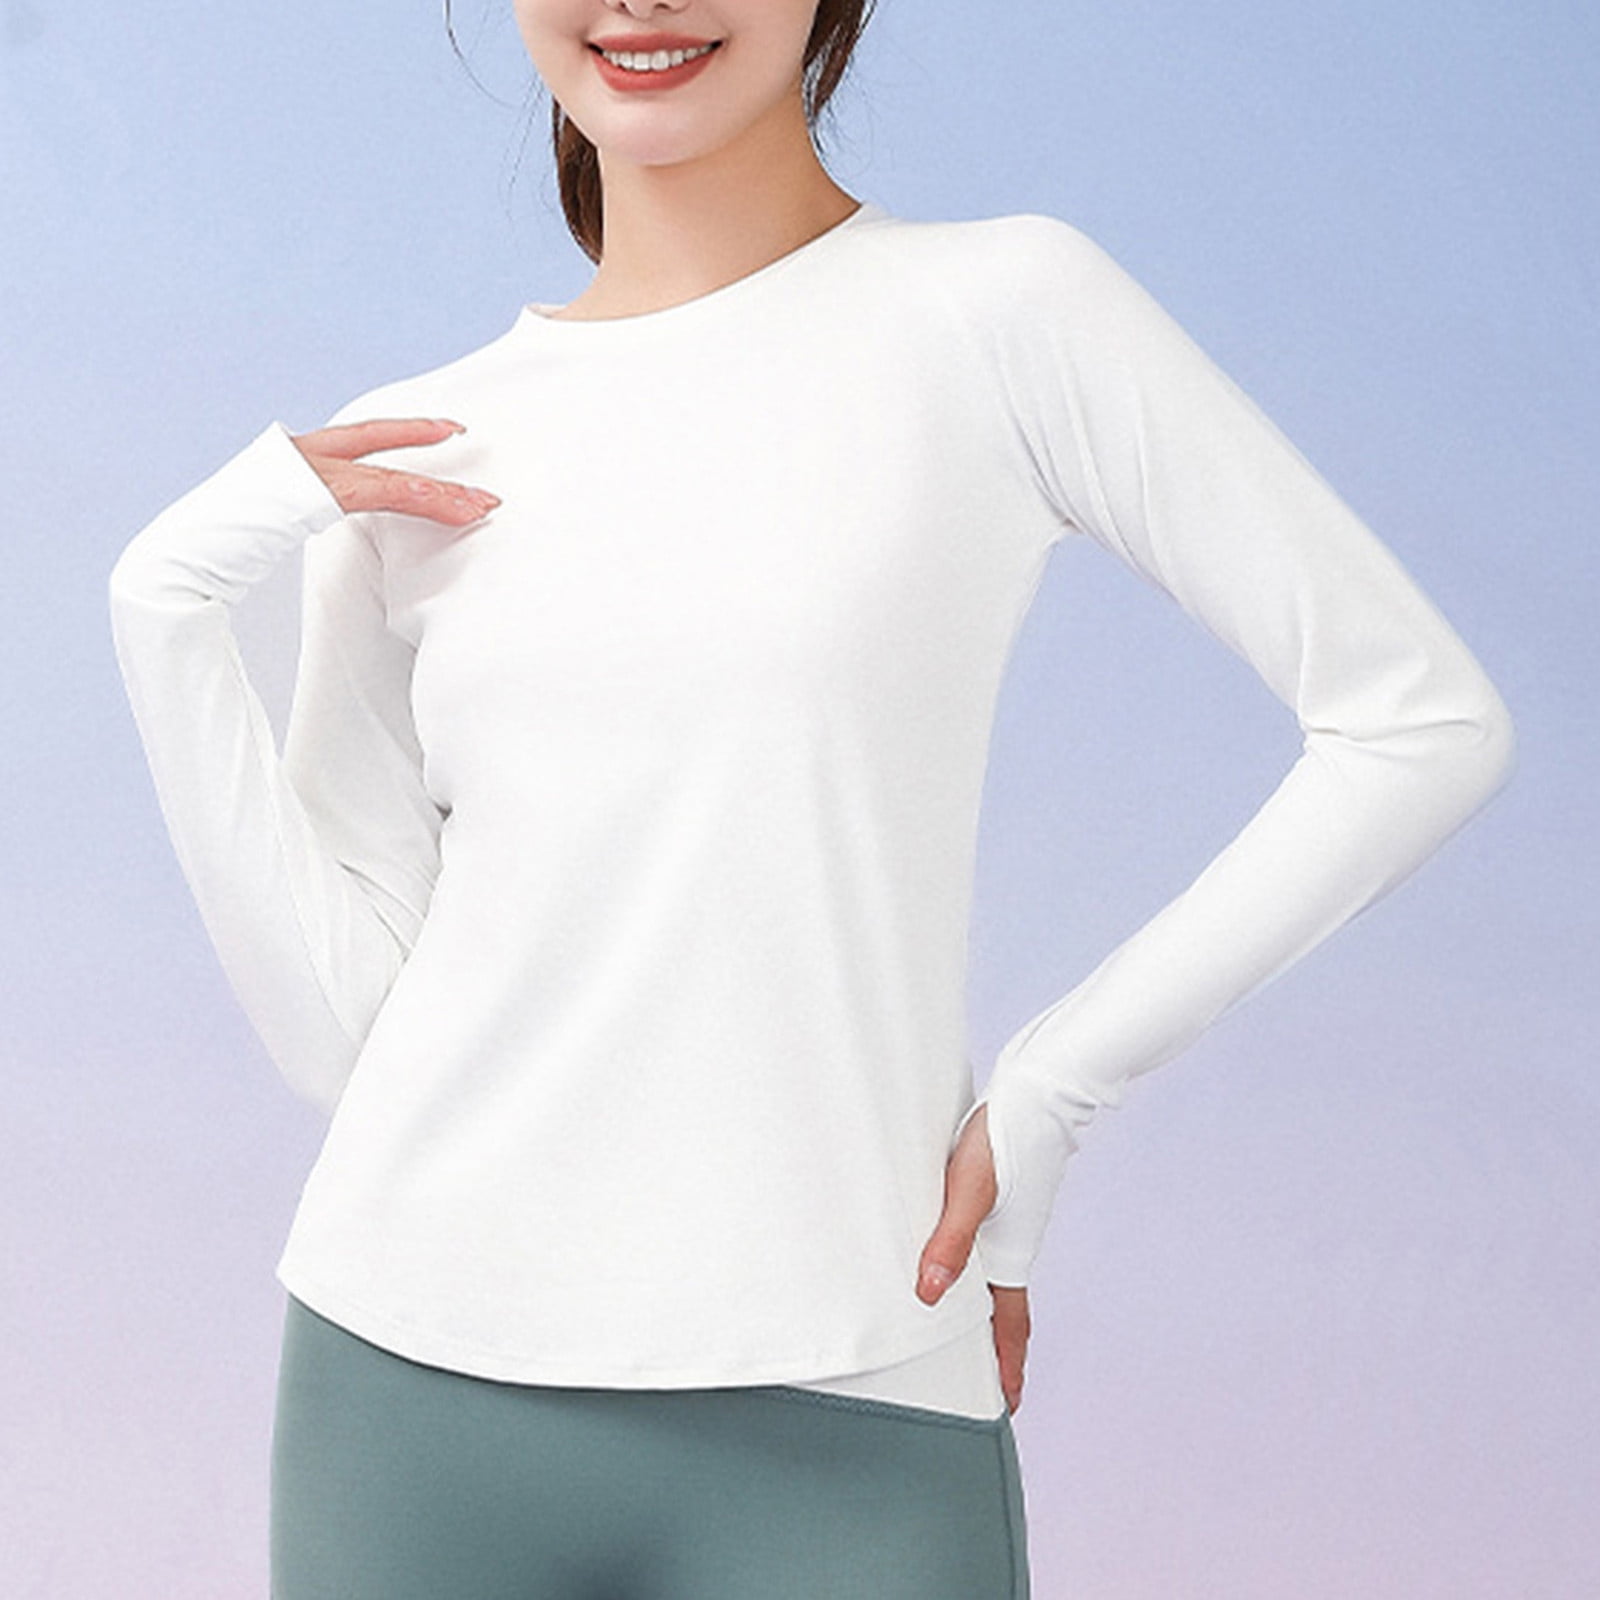 Hfyihgf Women's Long Sleeve Running Shirts with Thumbholes Stretch